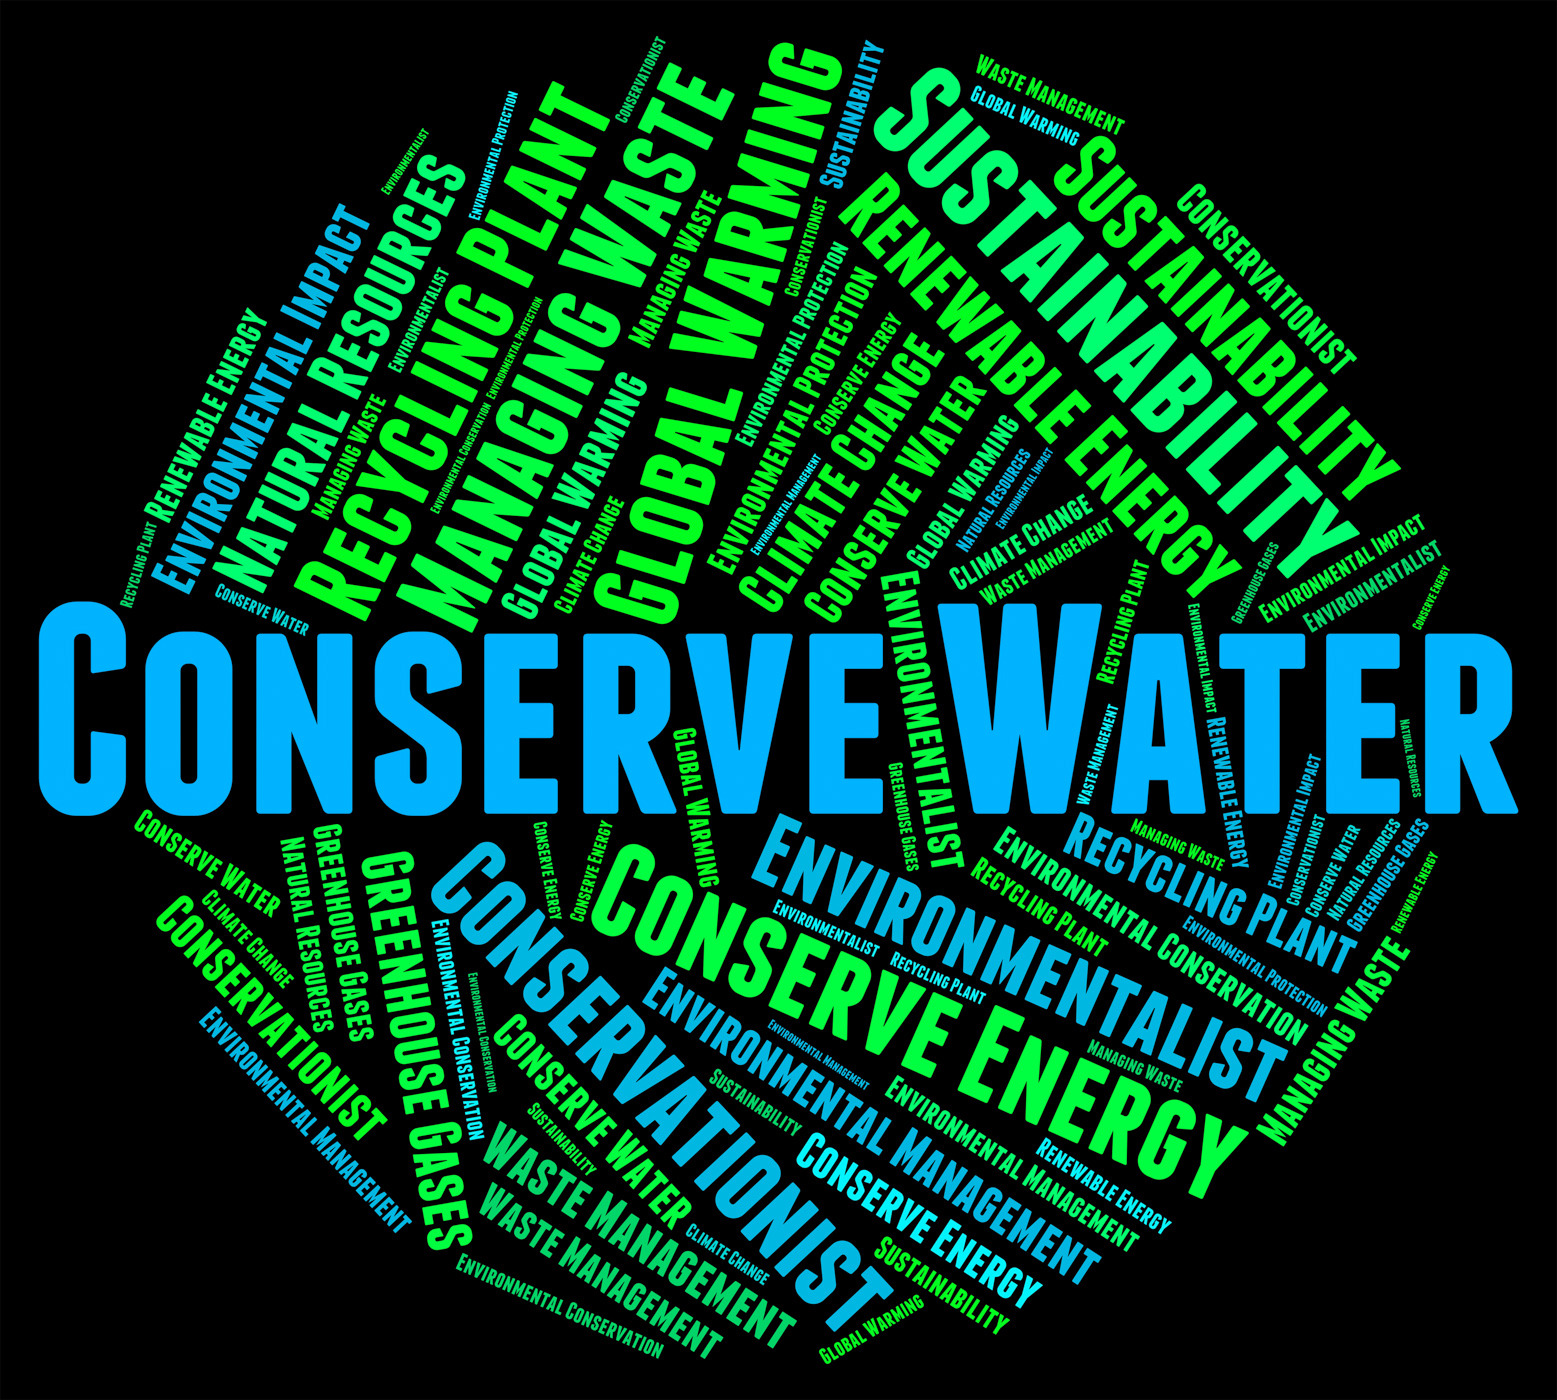 Conserve water represents preserve aqua and save photo